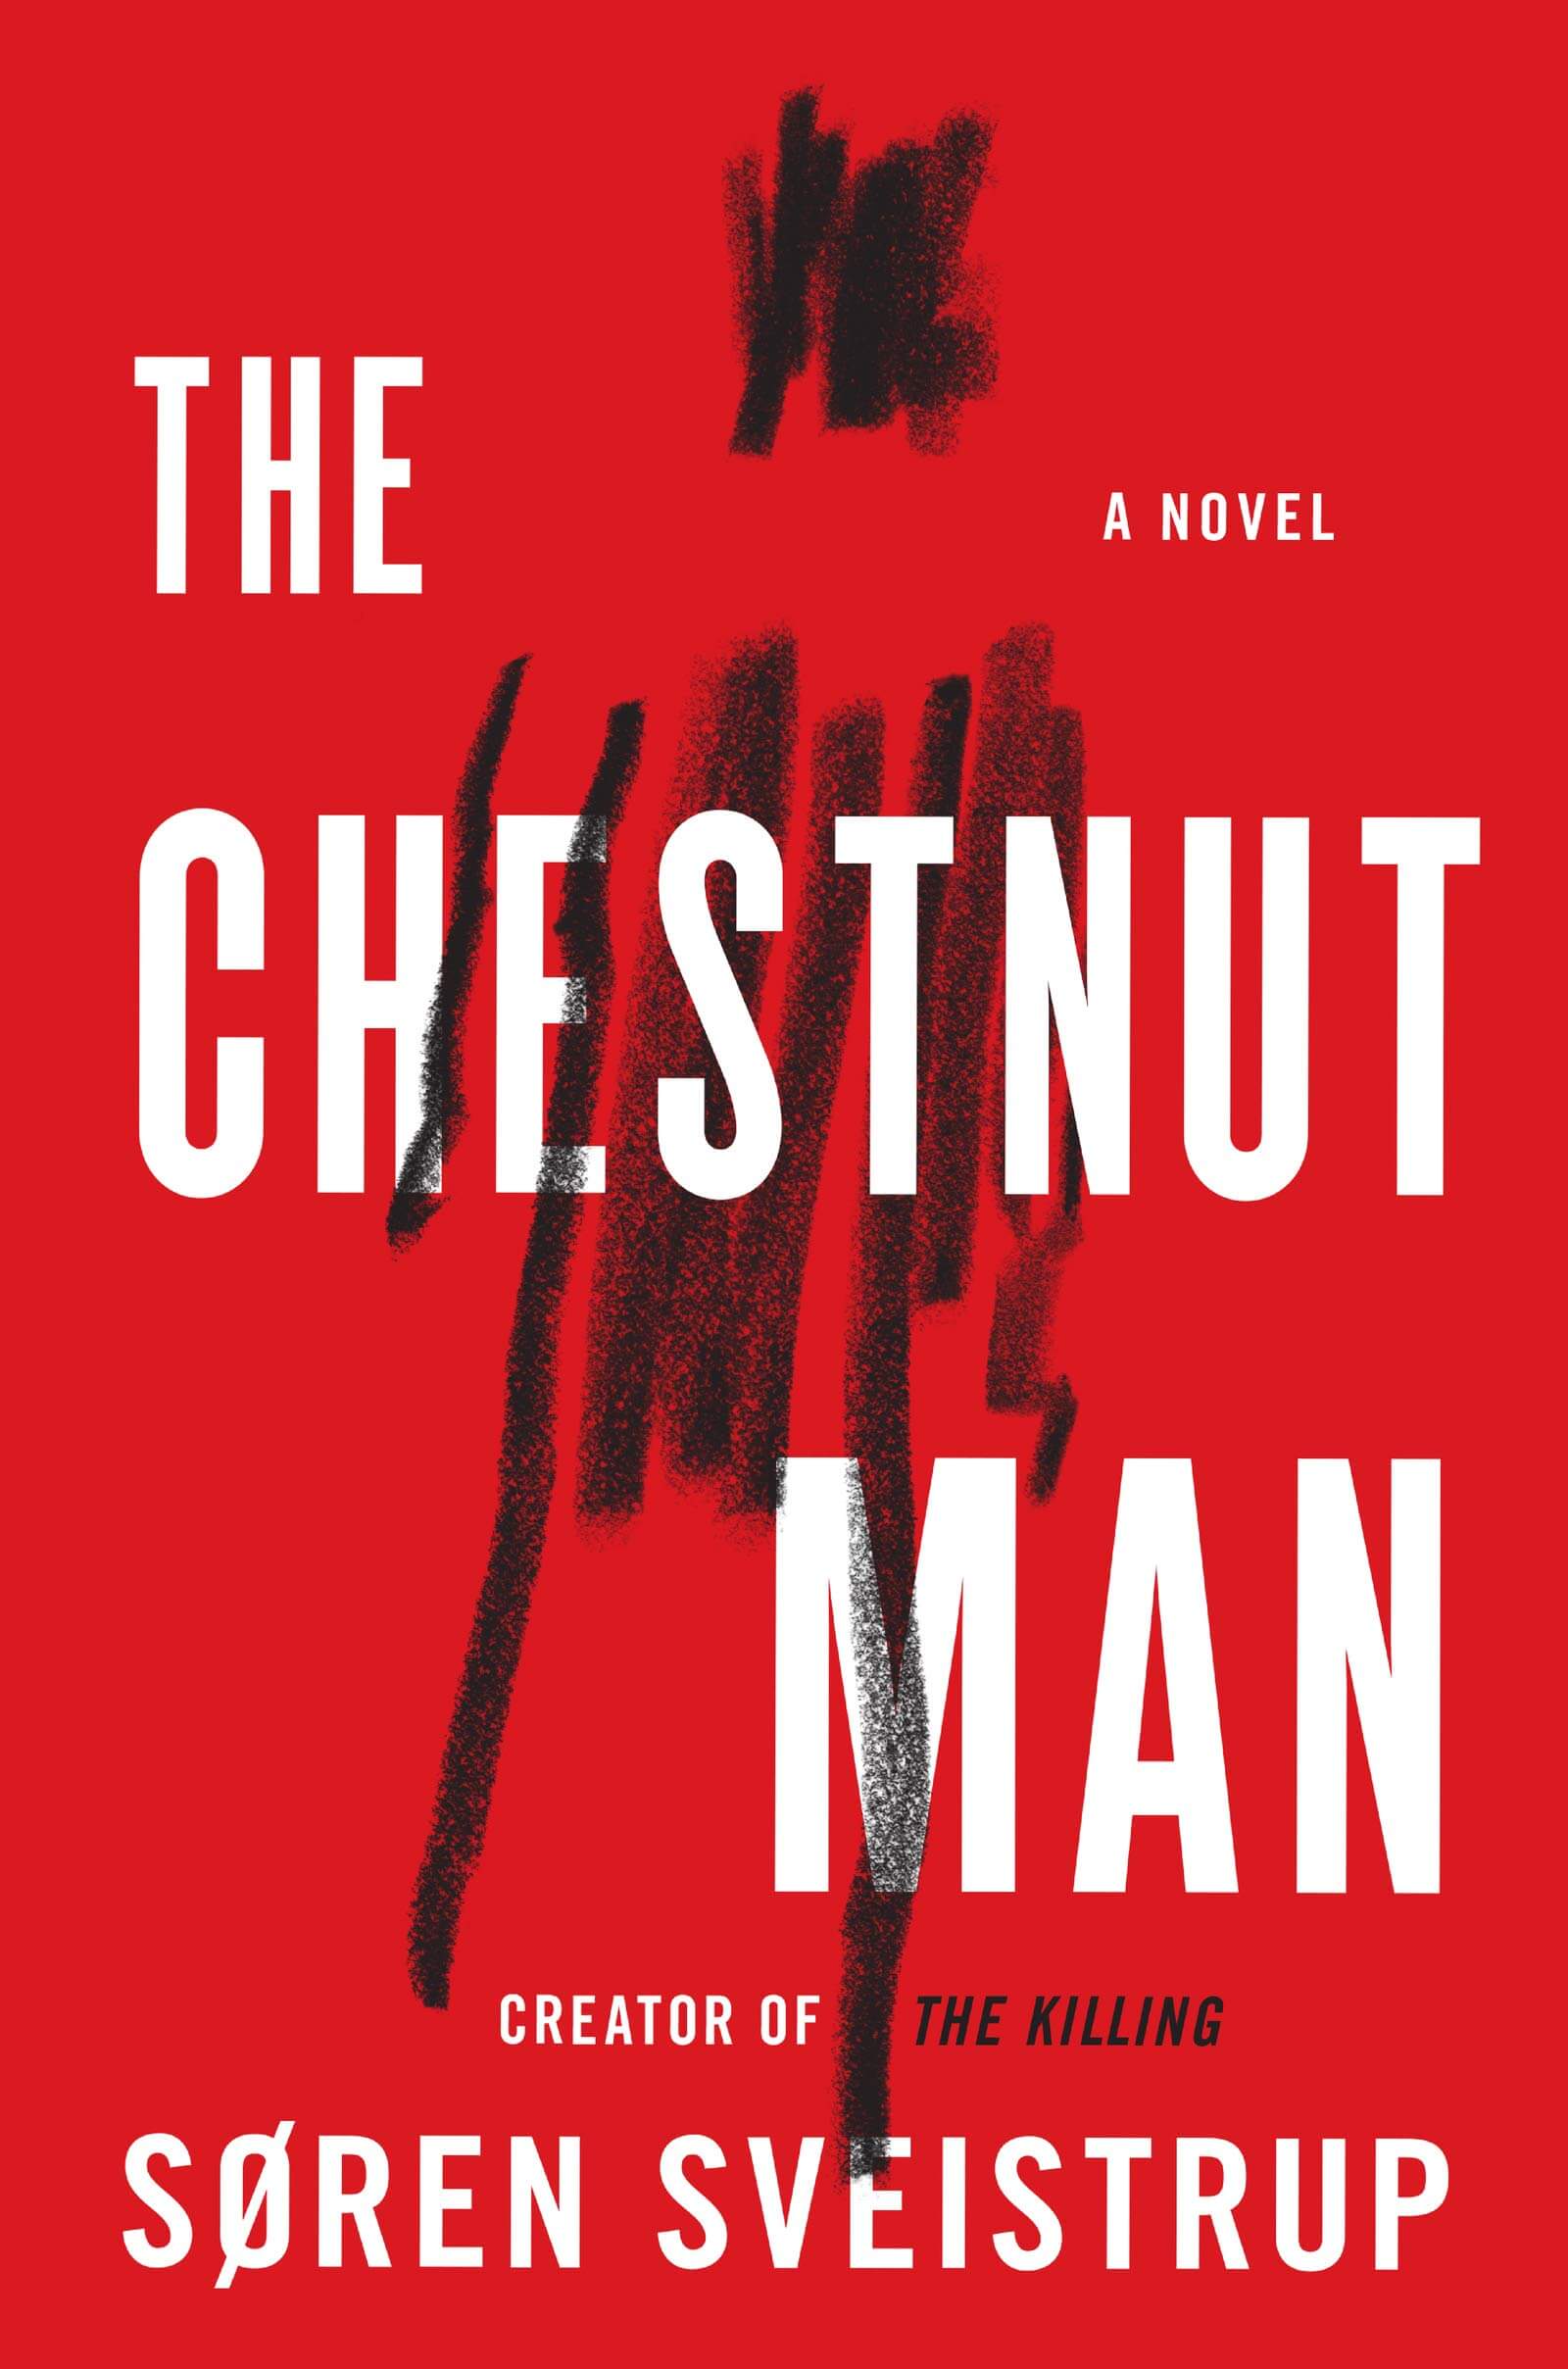 Cover of The Chestnut Man by Soren Sveistrup 